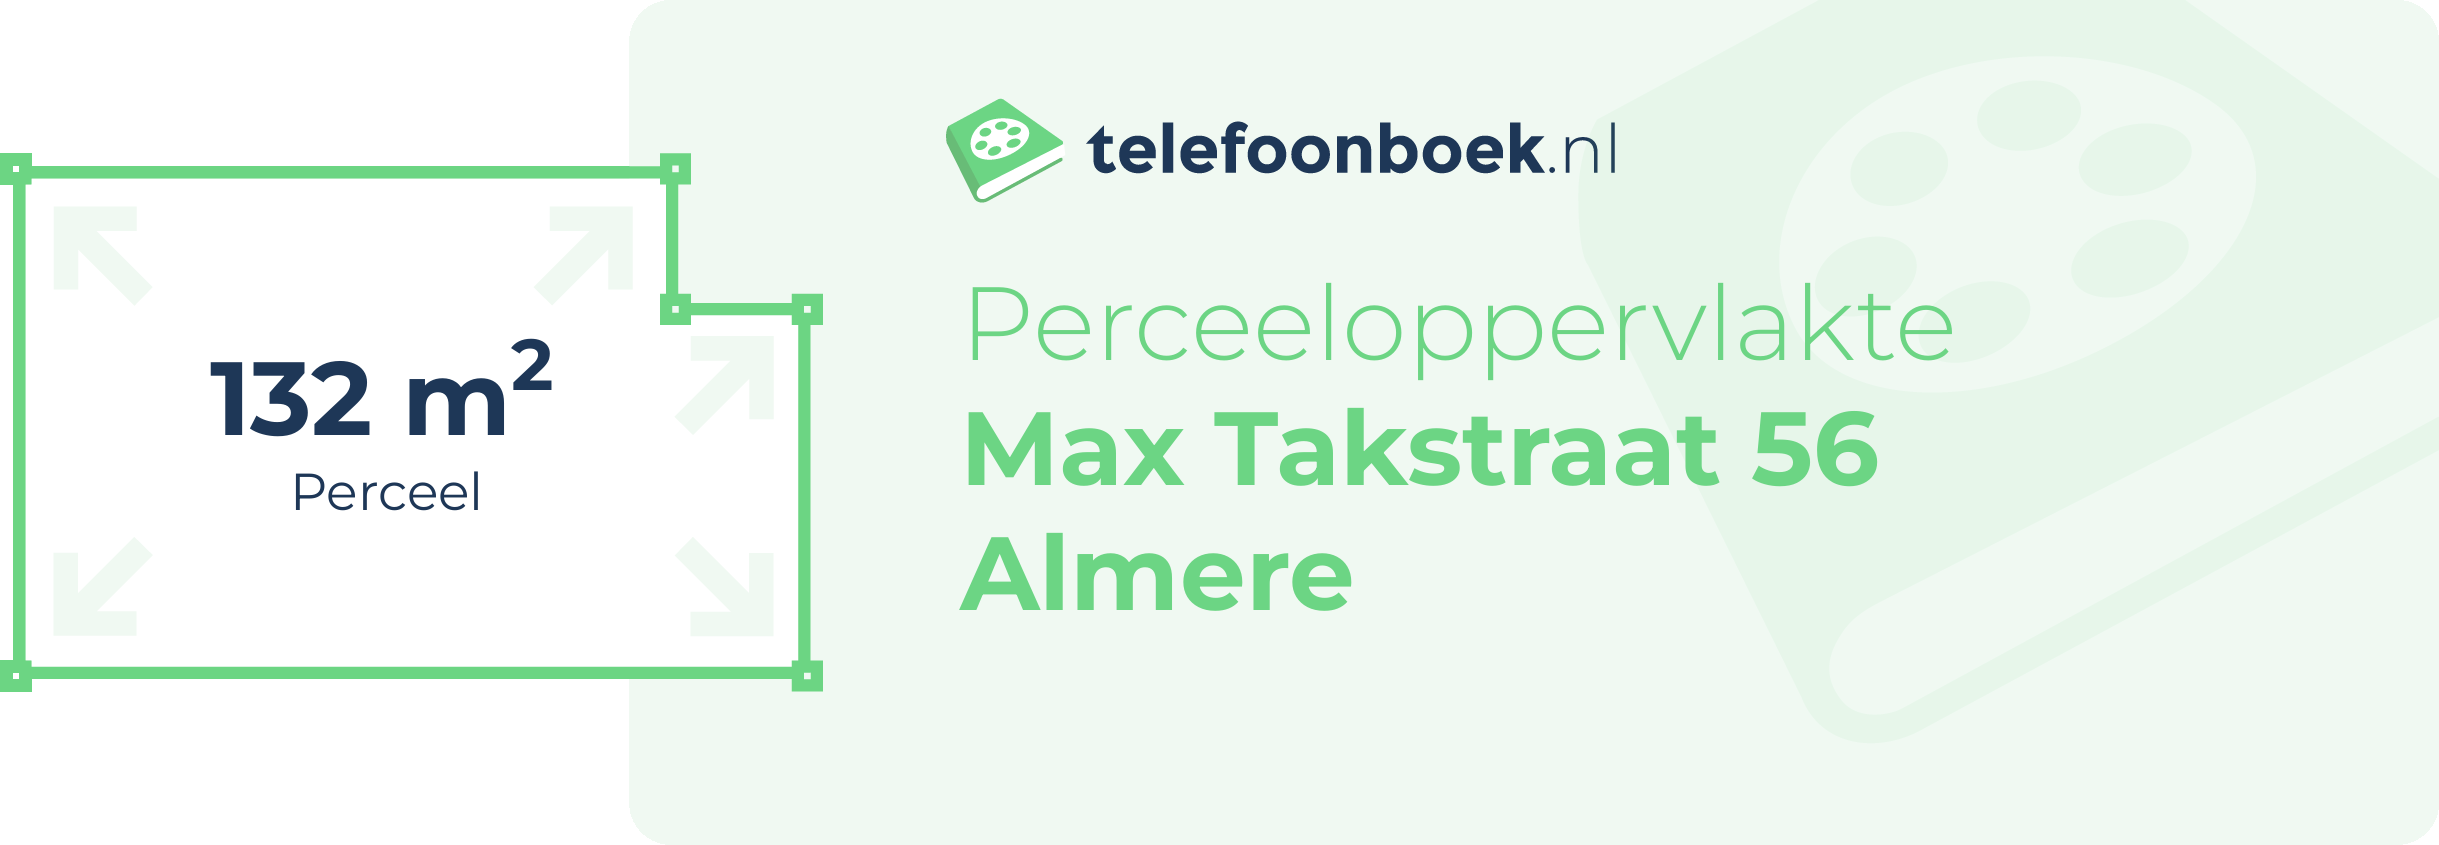 Perceeloppervlakte Max Takstraat 56 Almere